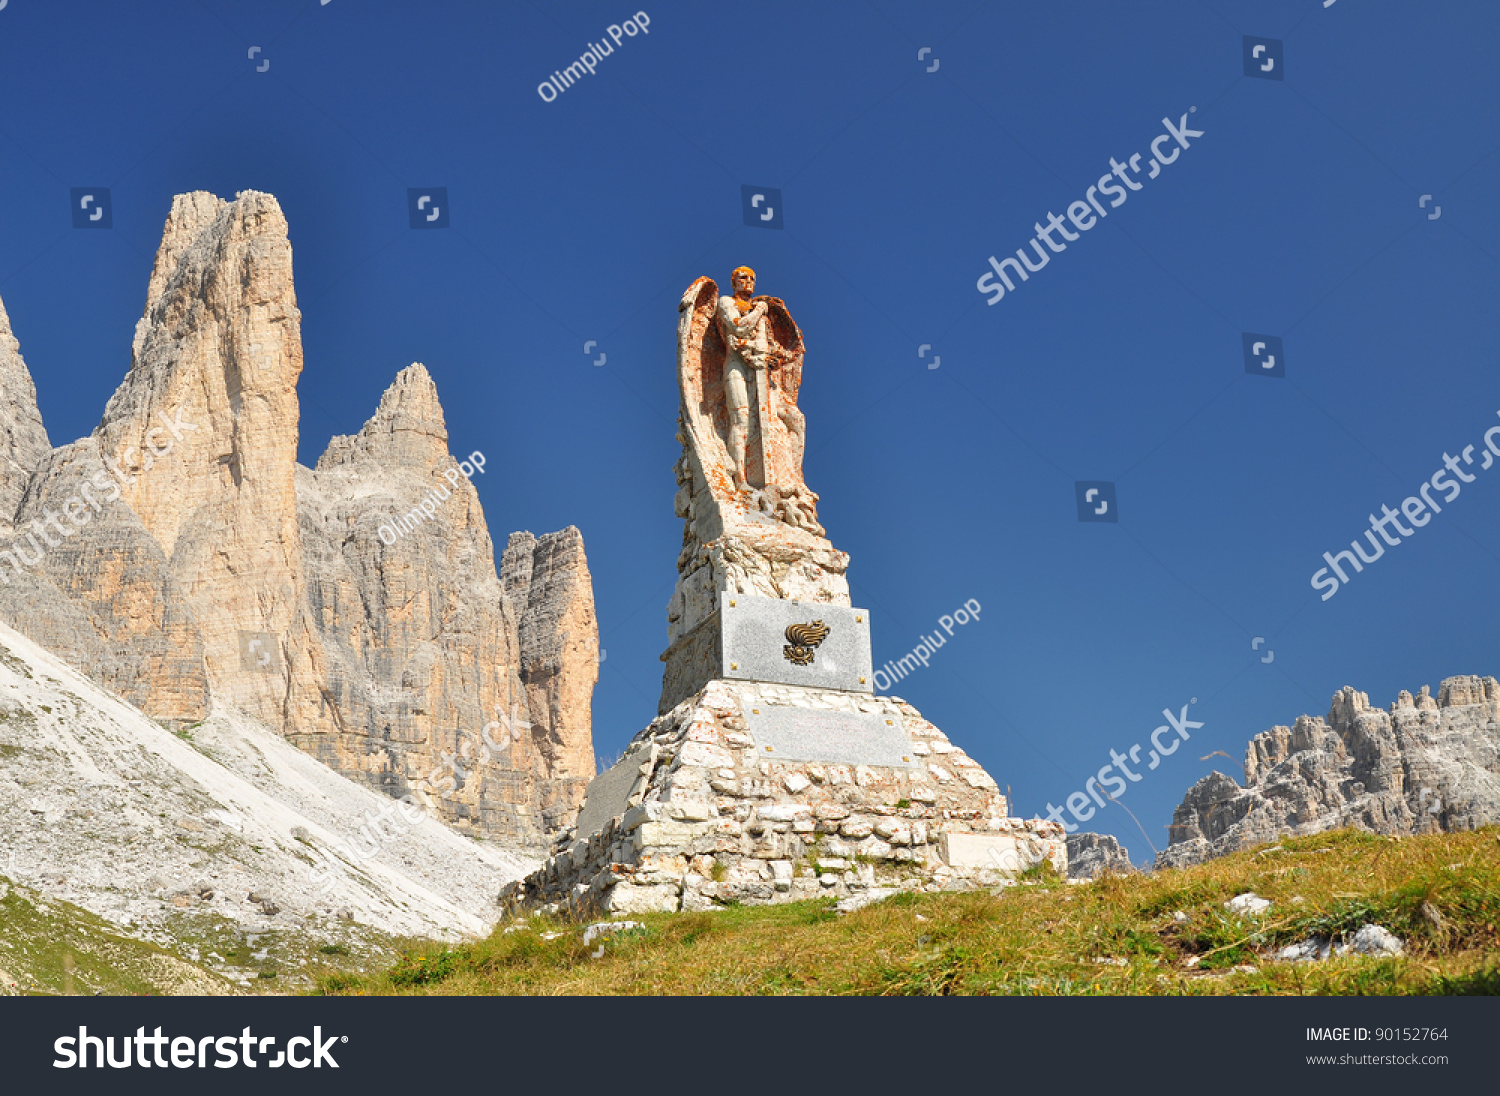 Memorial monument and Tre Cime di Lavaredo, Italy #90152764